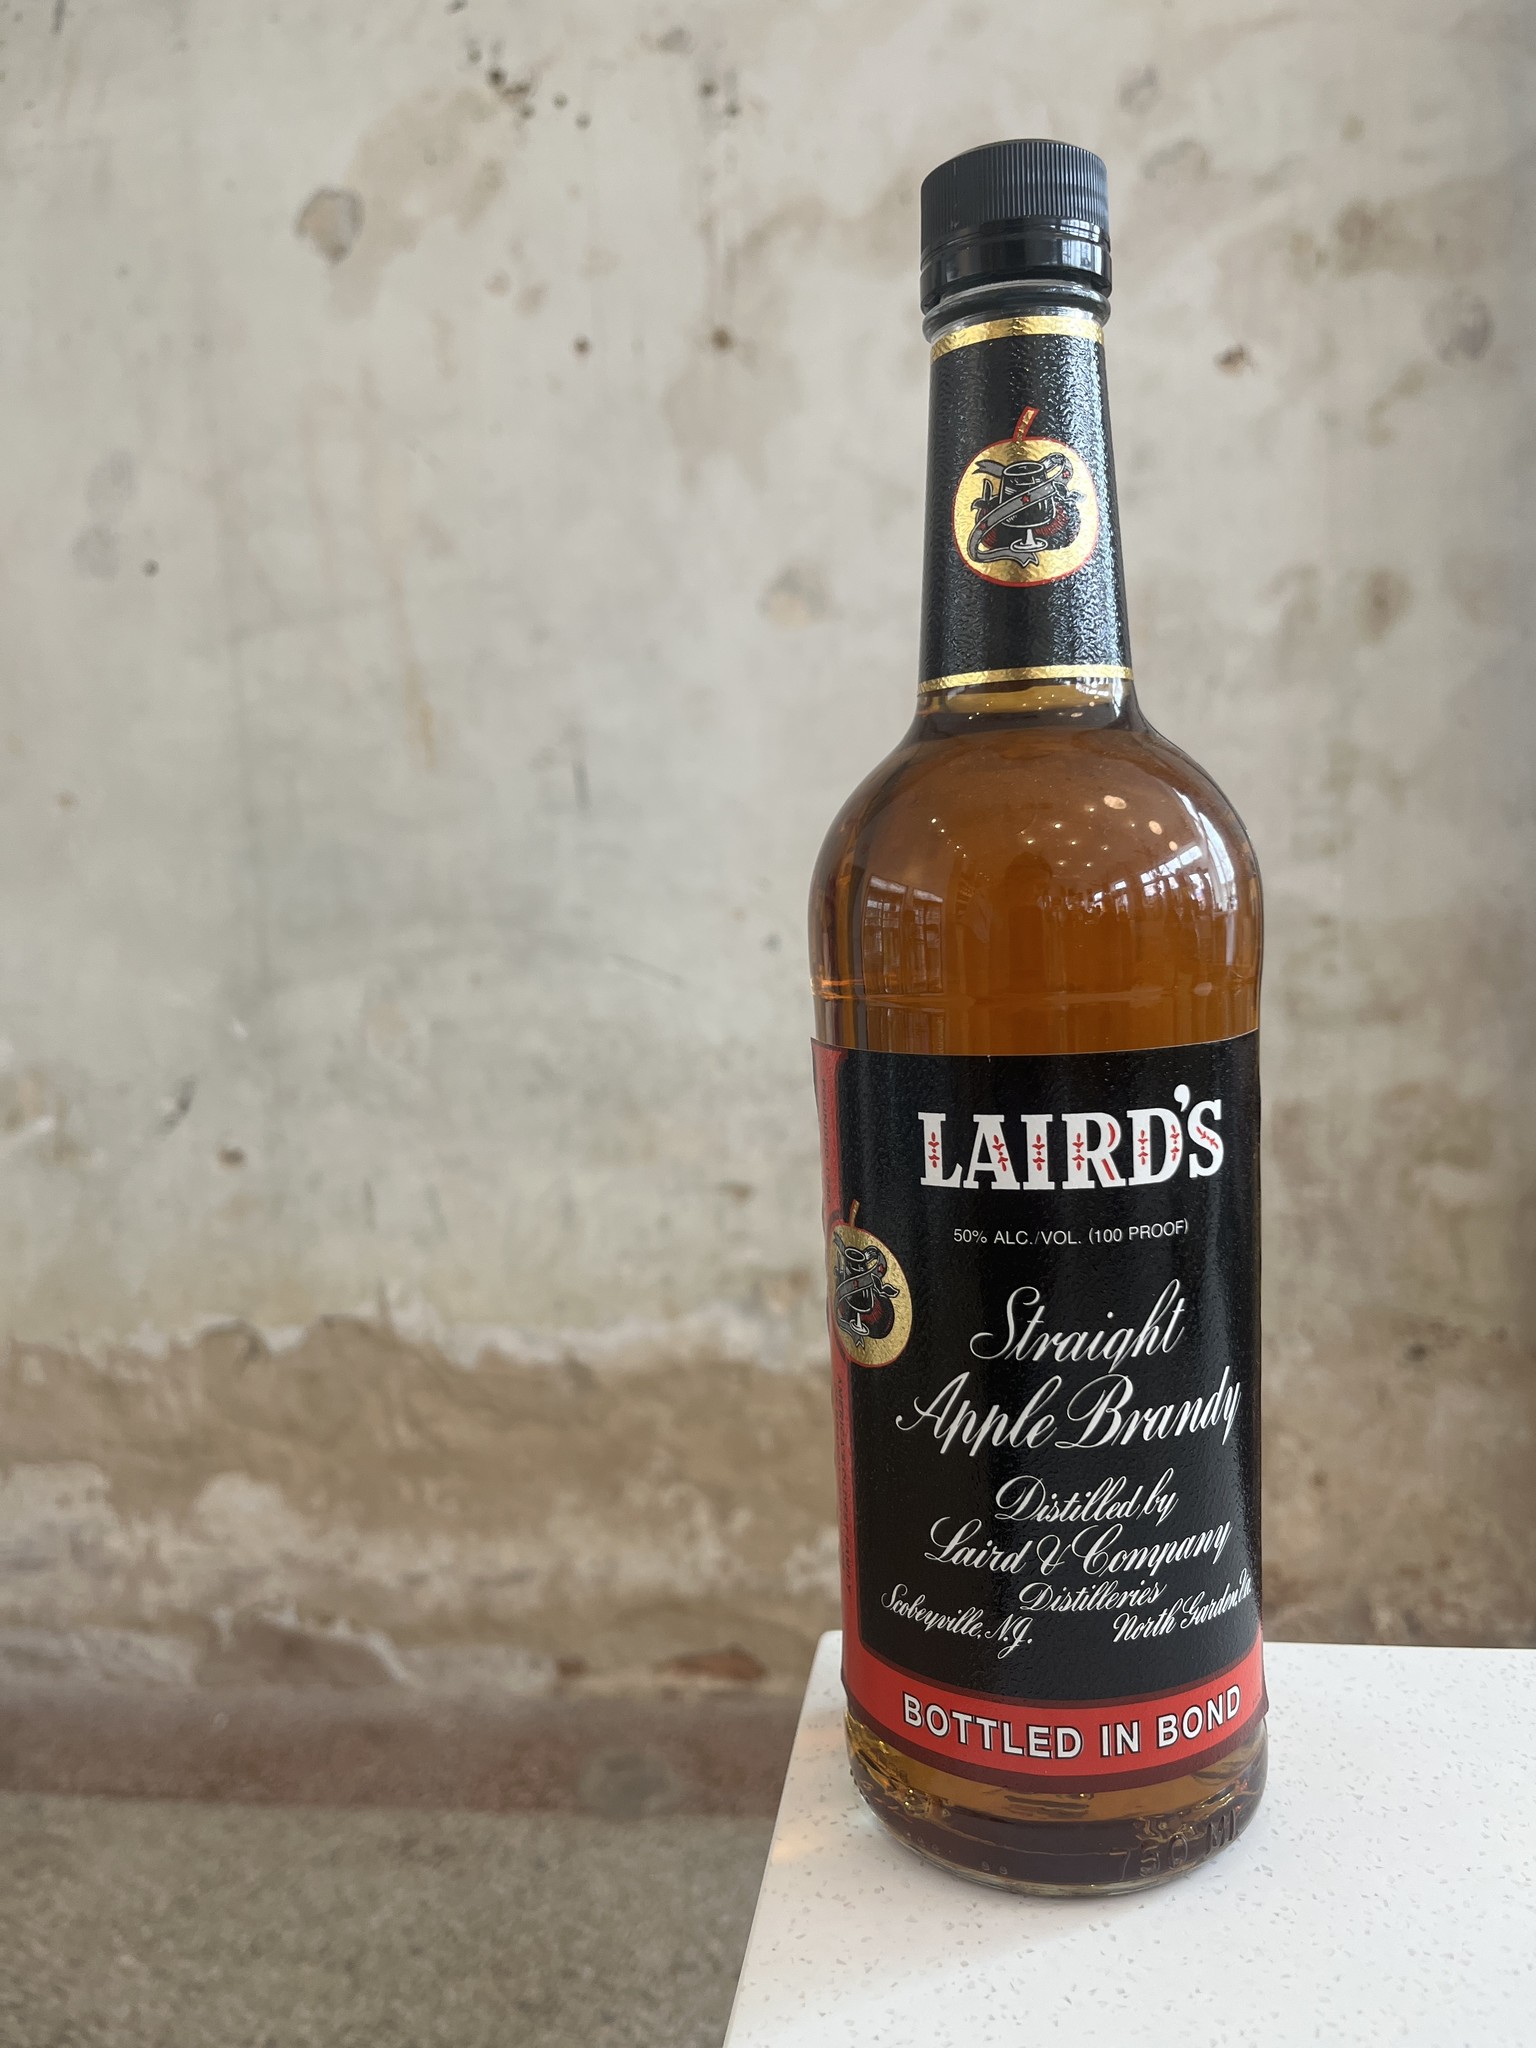 Laird's Laird's Apple Brandy Bottled in Bond